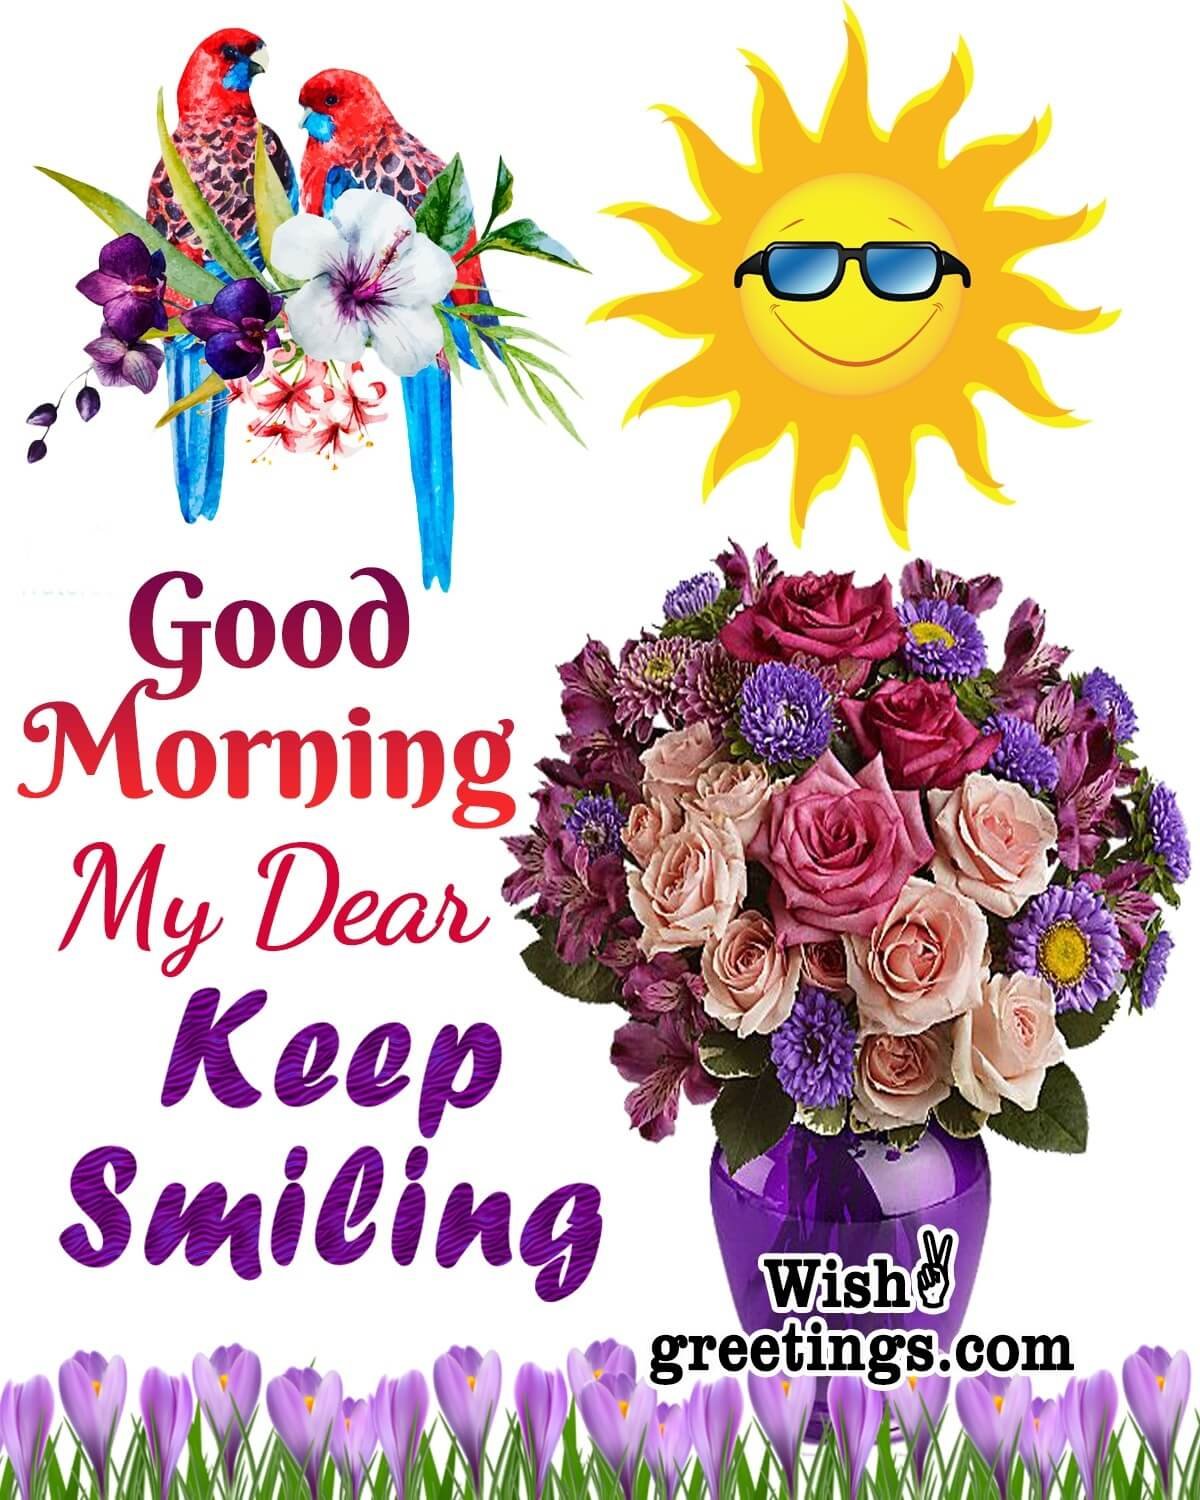 Good Morning My Dear Keep Smiling